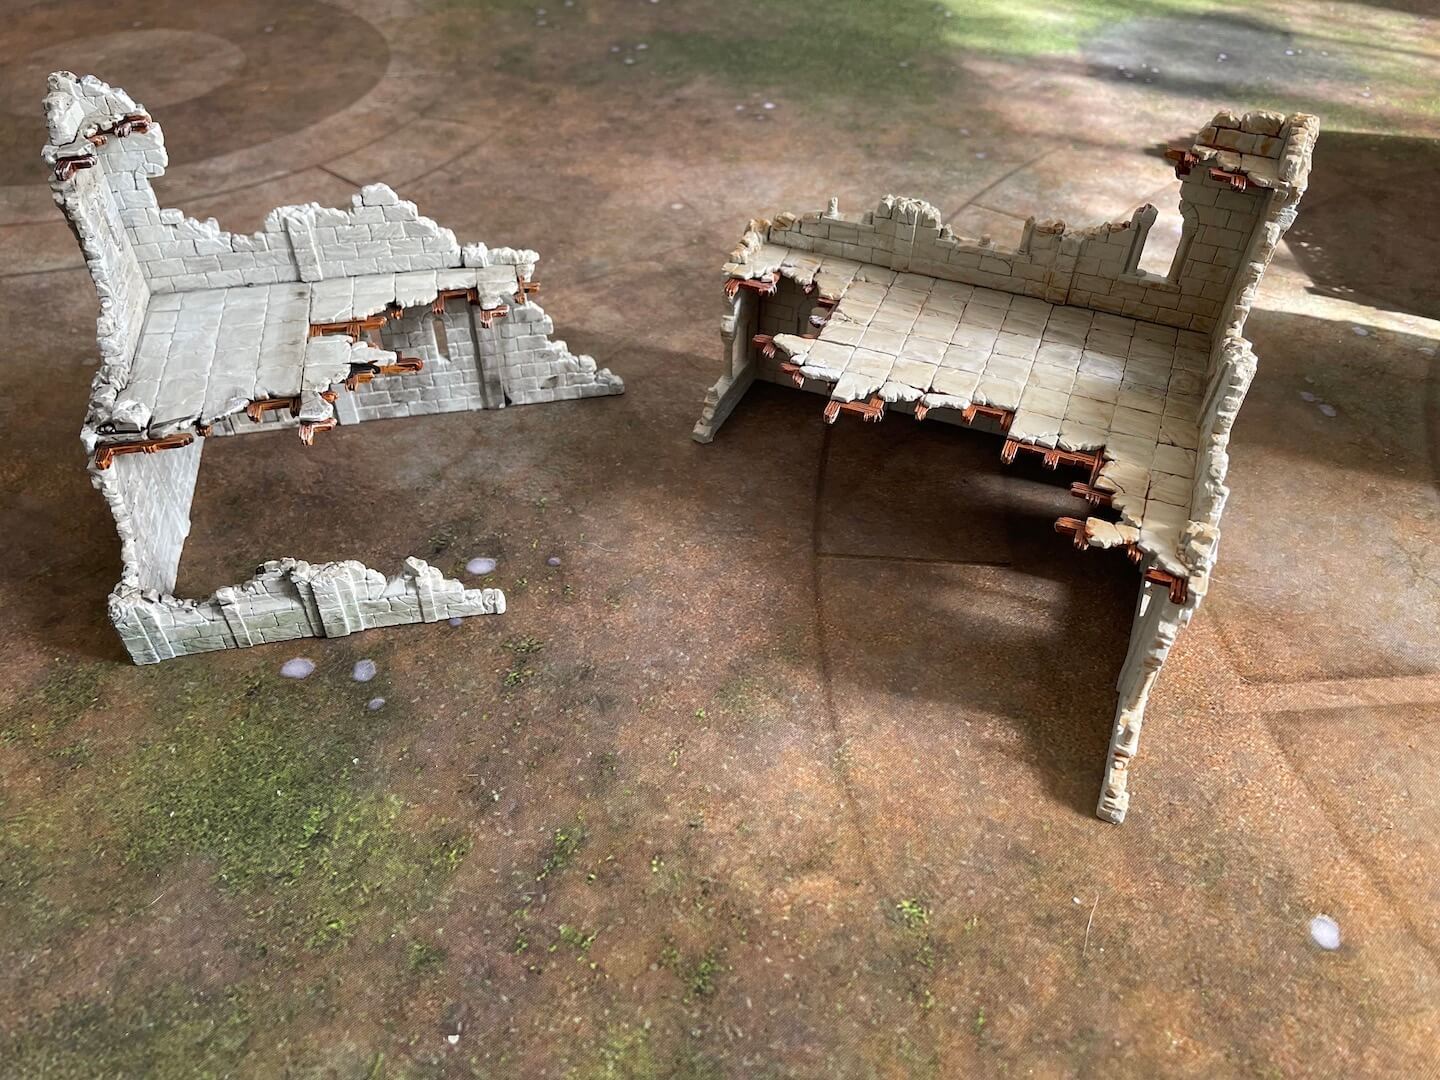 An image of Games Workshop LOTR terrain, Gondor Ruins